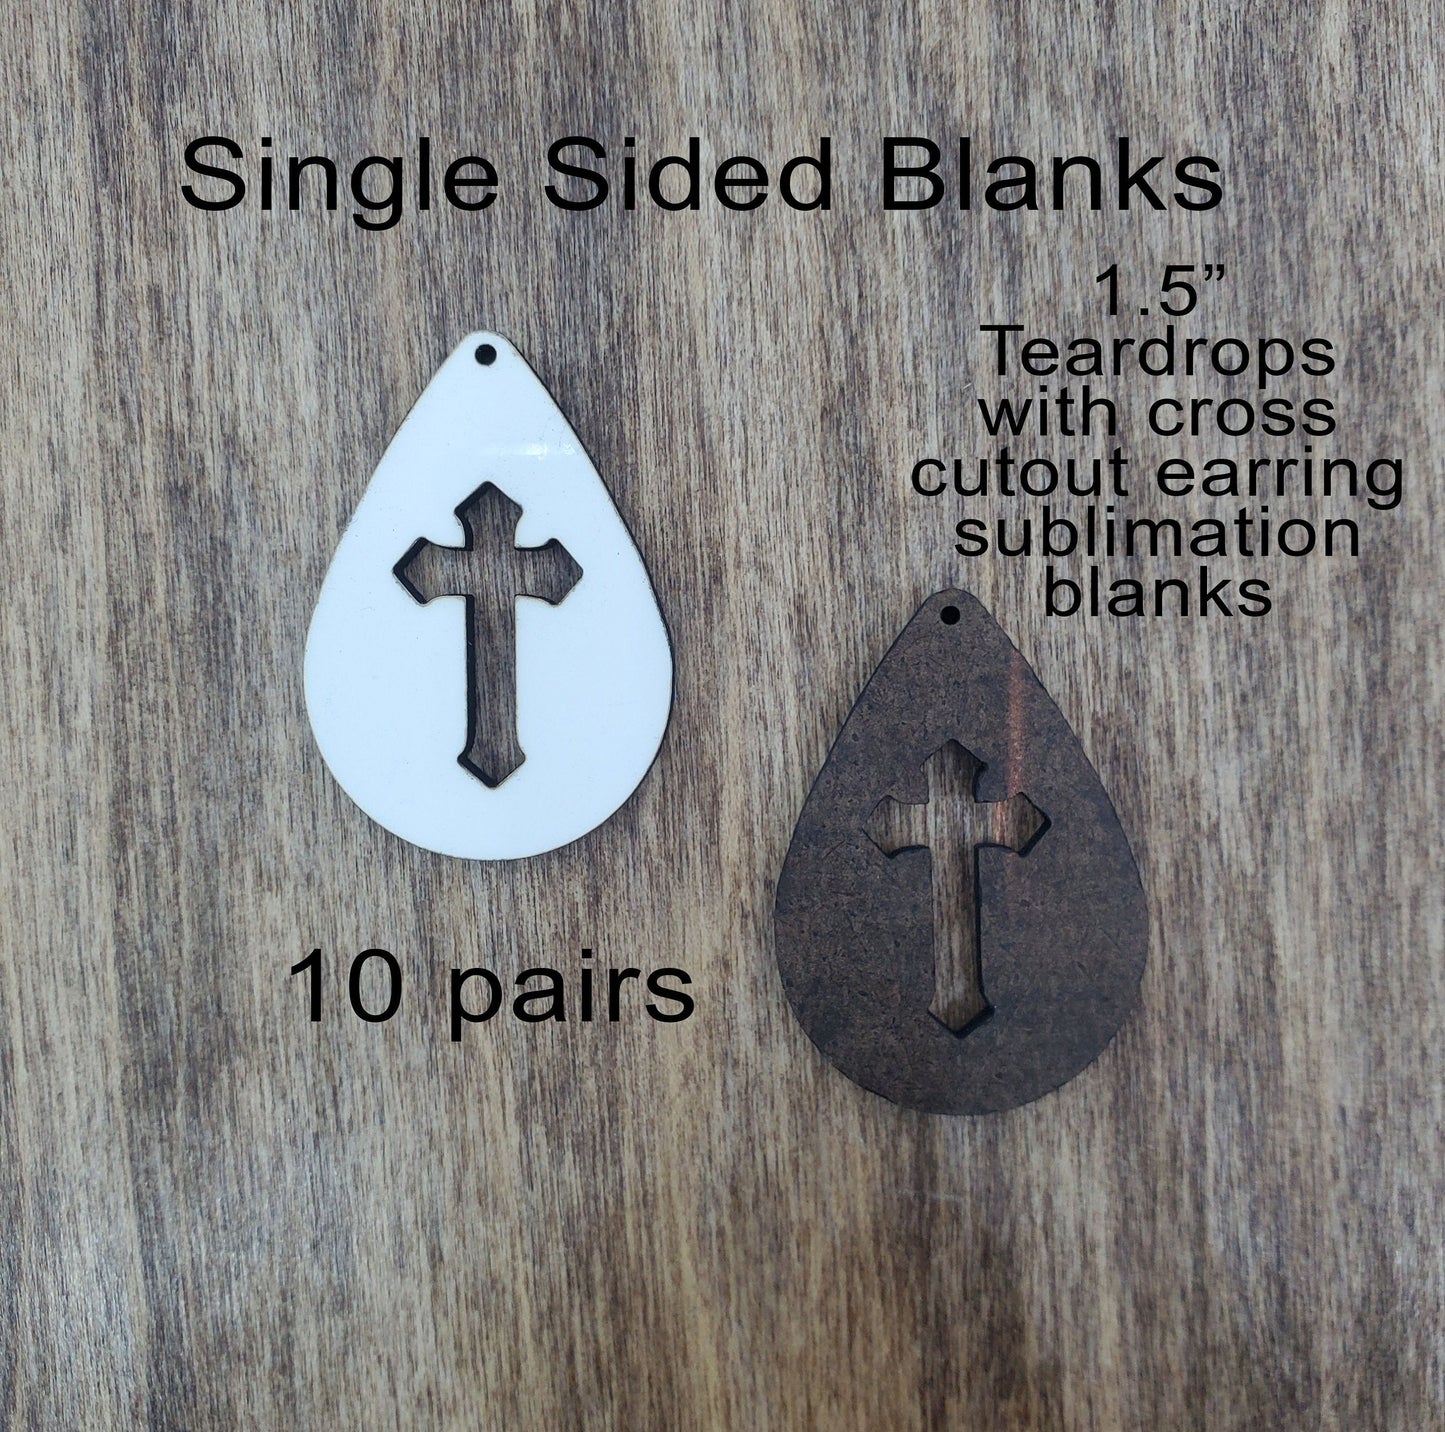 Sublimation hardboard blanks, teardrop cross cutout earring sublimation blanks, SINGLE-sided teardrop earring shape blanks for sublimation